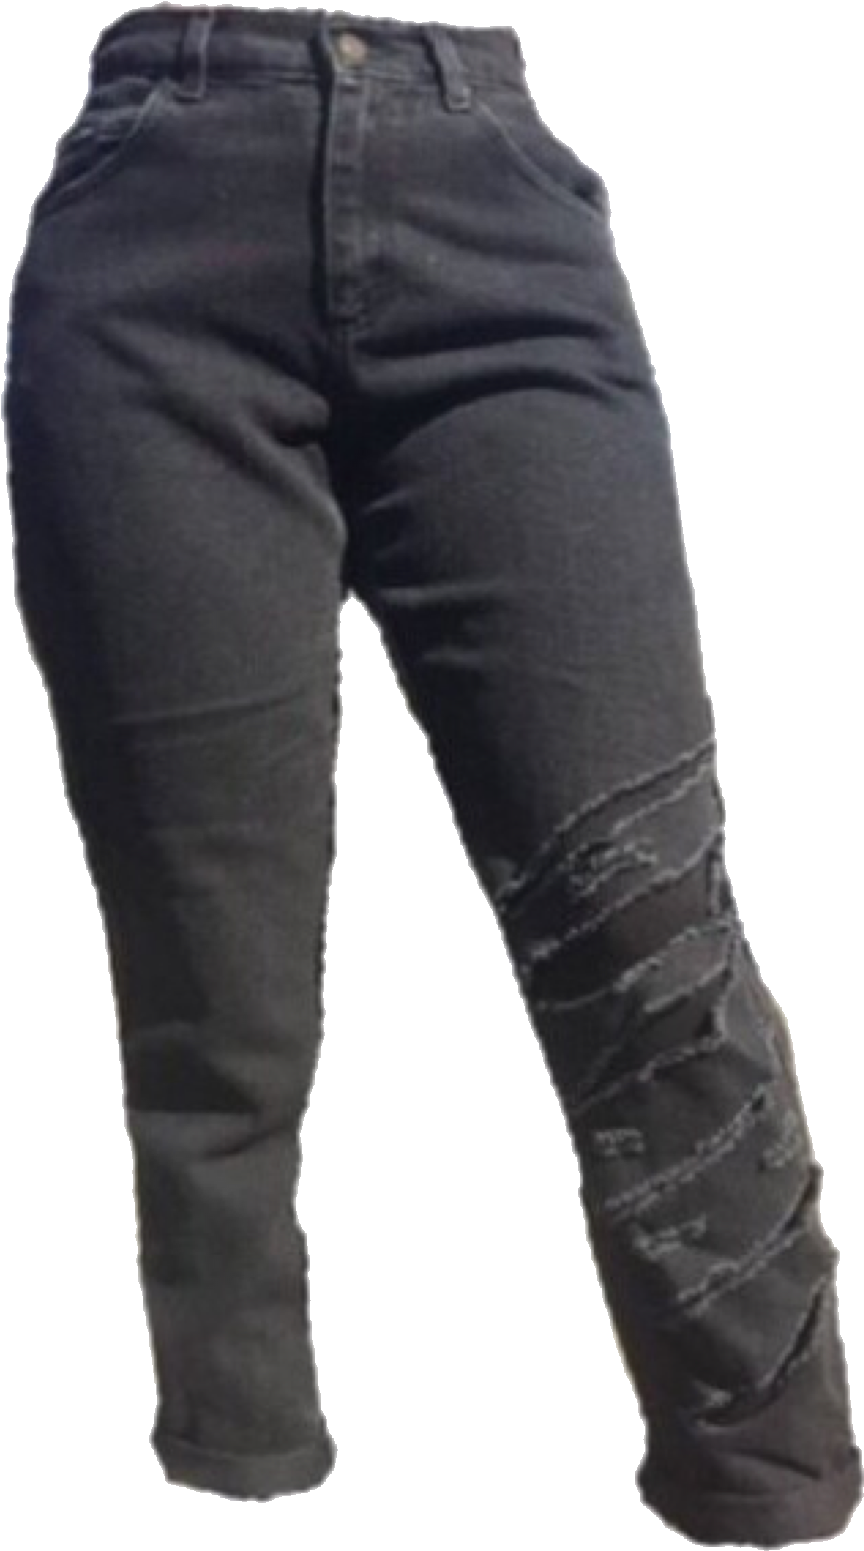 Black Denim Jeans Standing Position